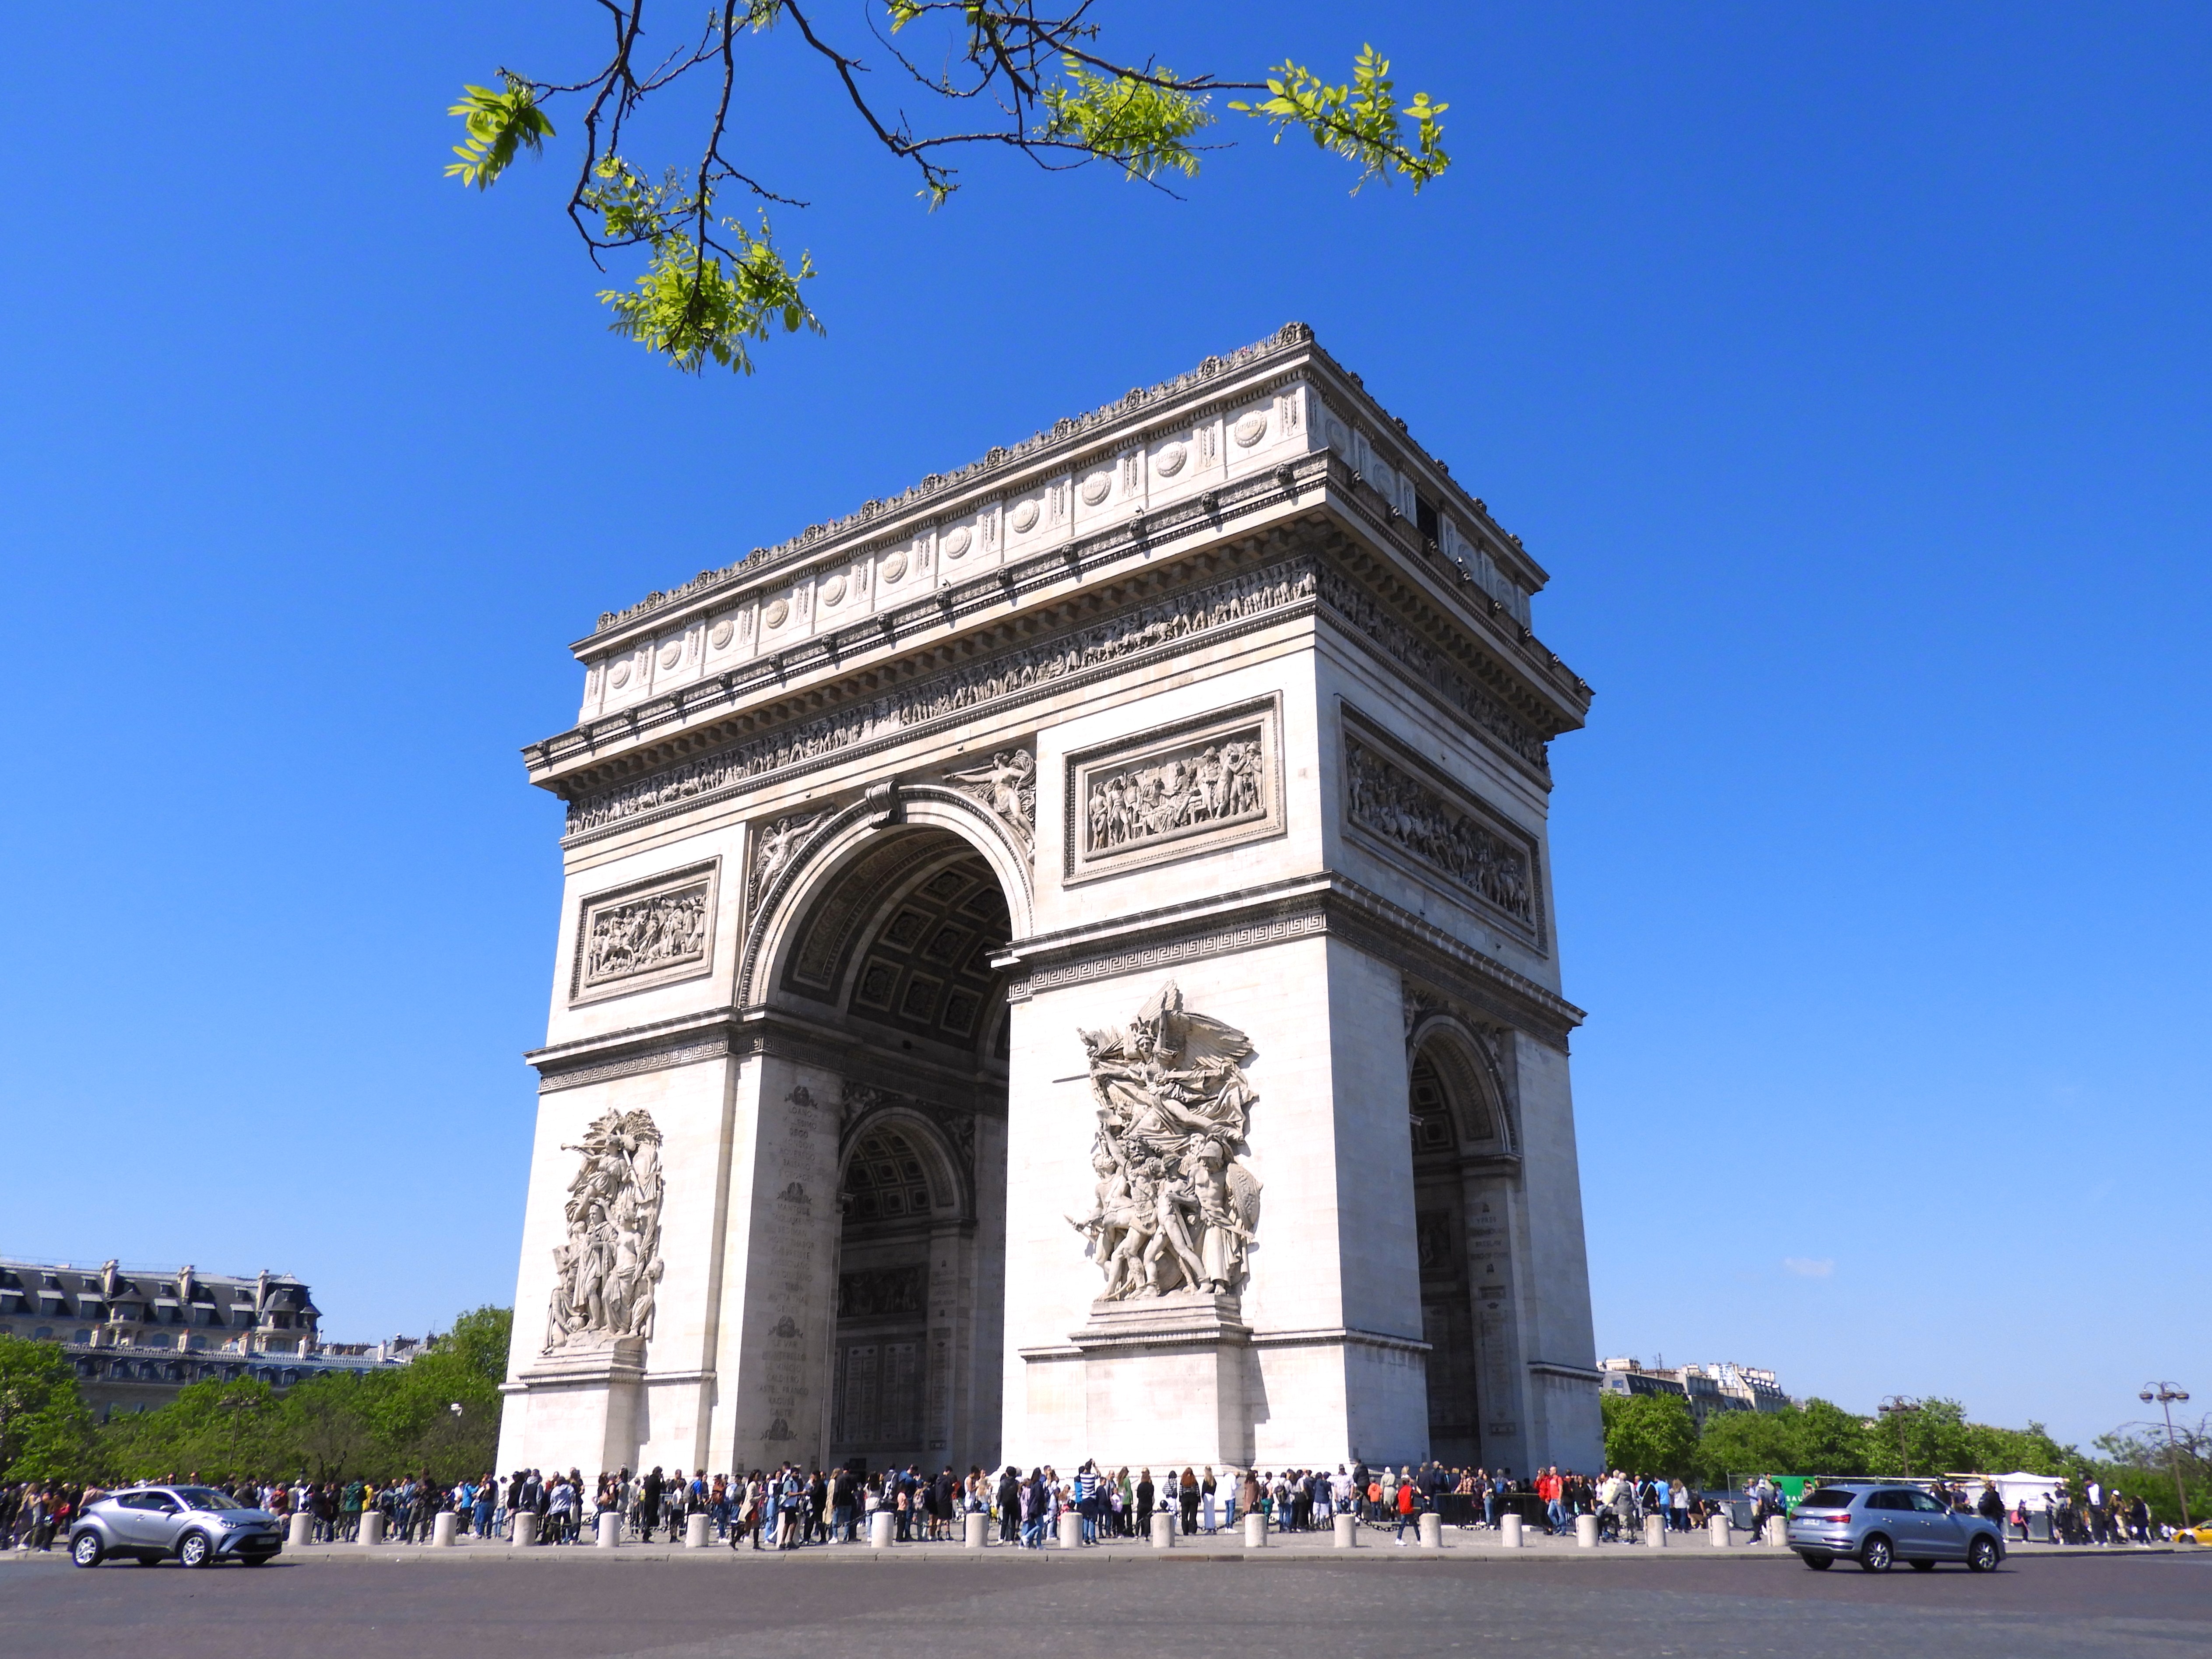 1207 - 025 - Arco di Trionfo agli Champs ElysÃ¨e a Parigi - Francia